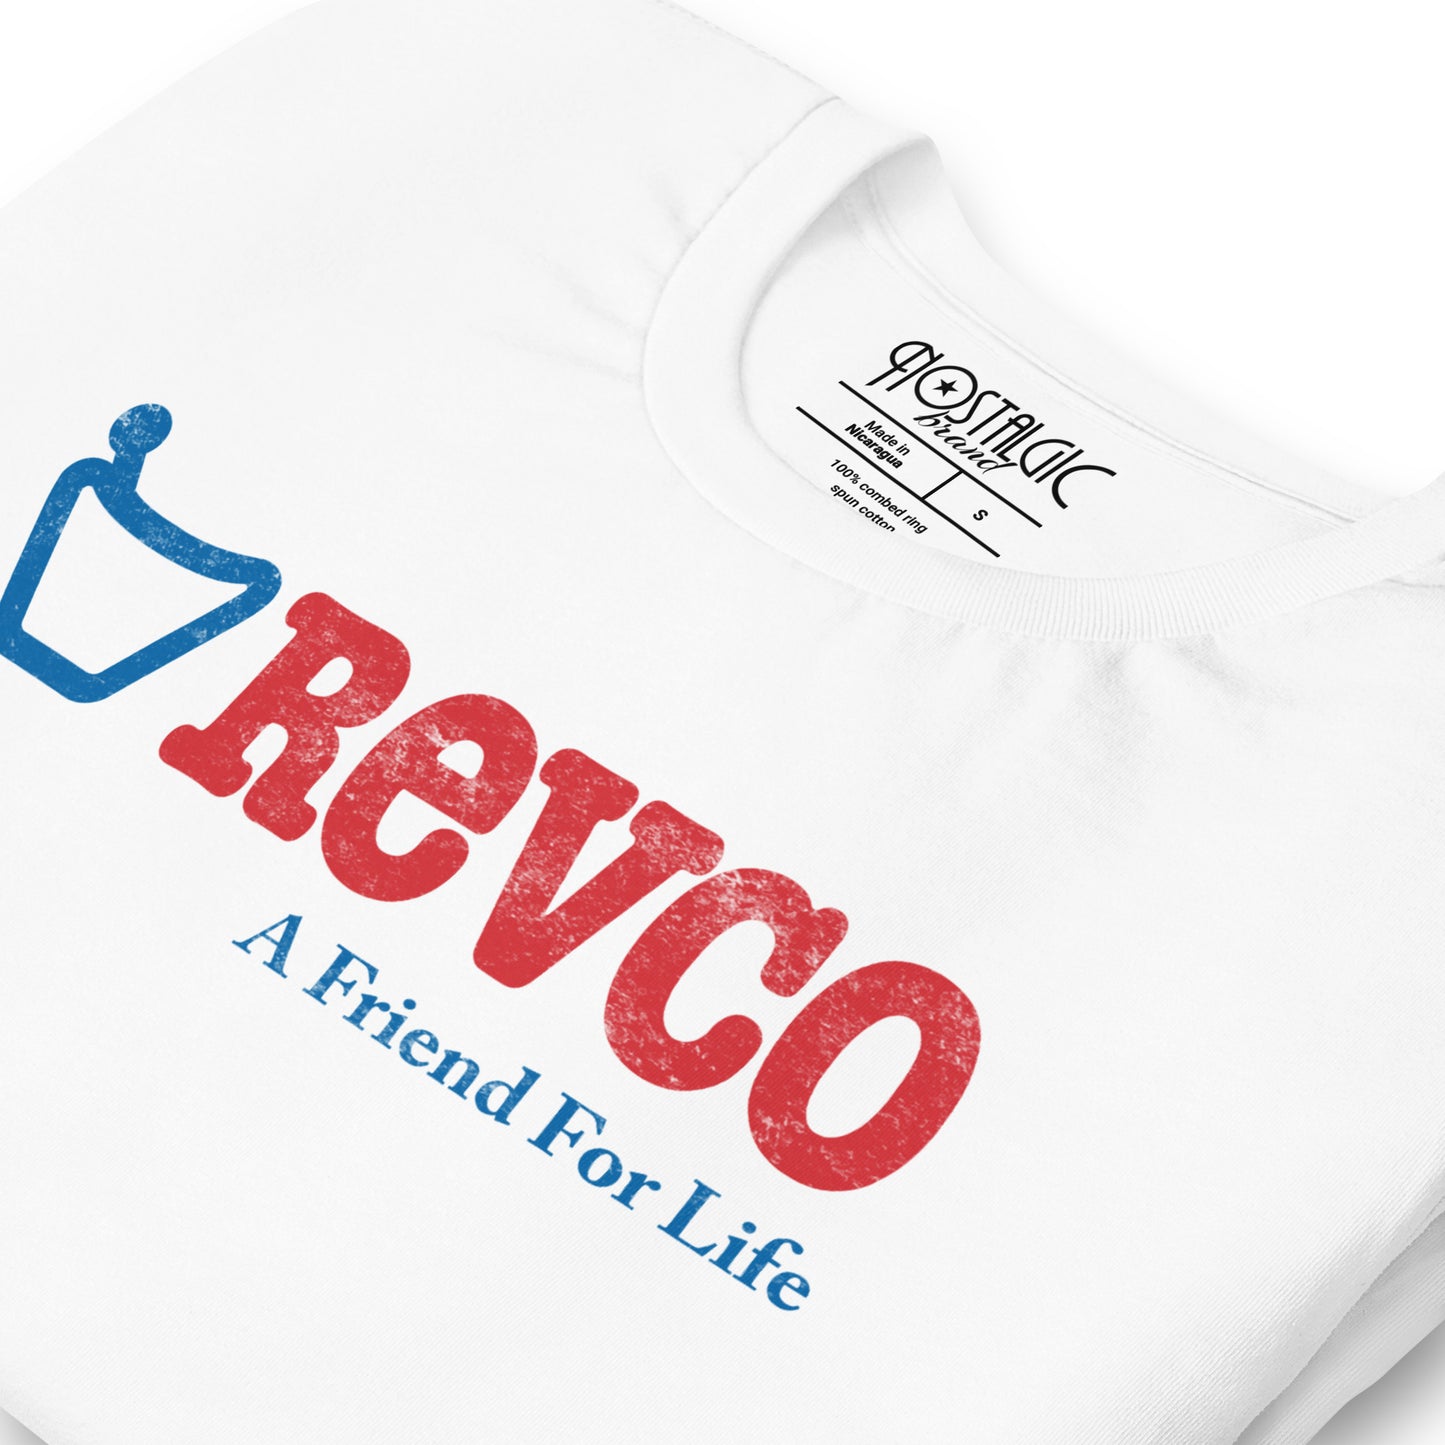 Revco Discount Drug Stores